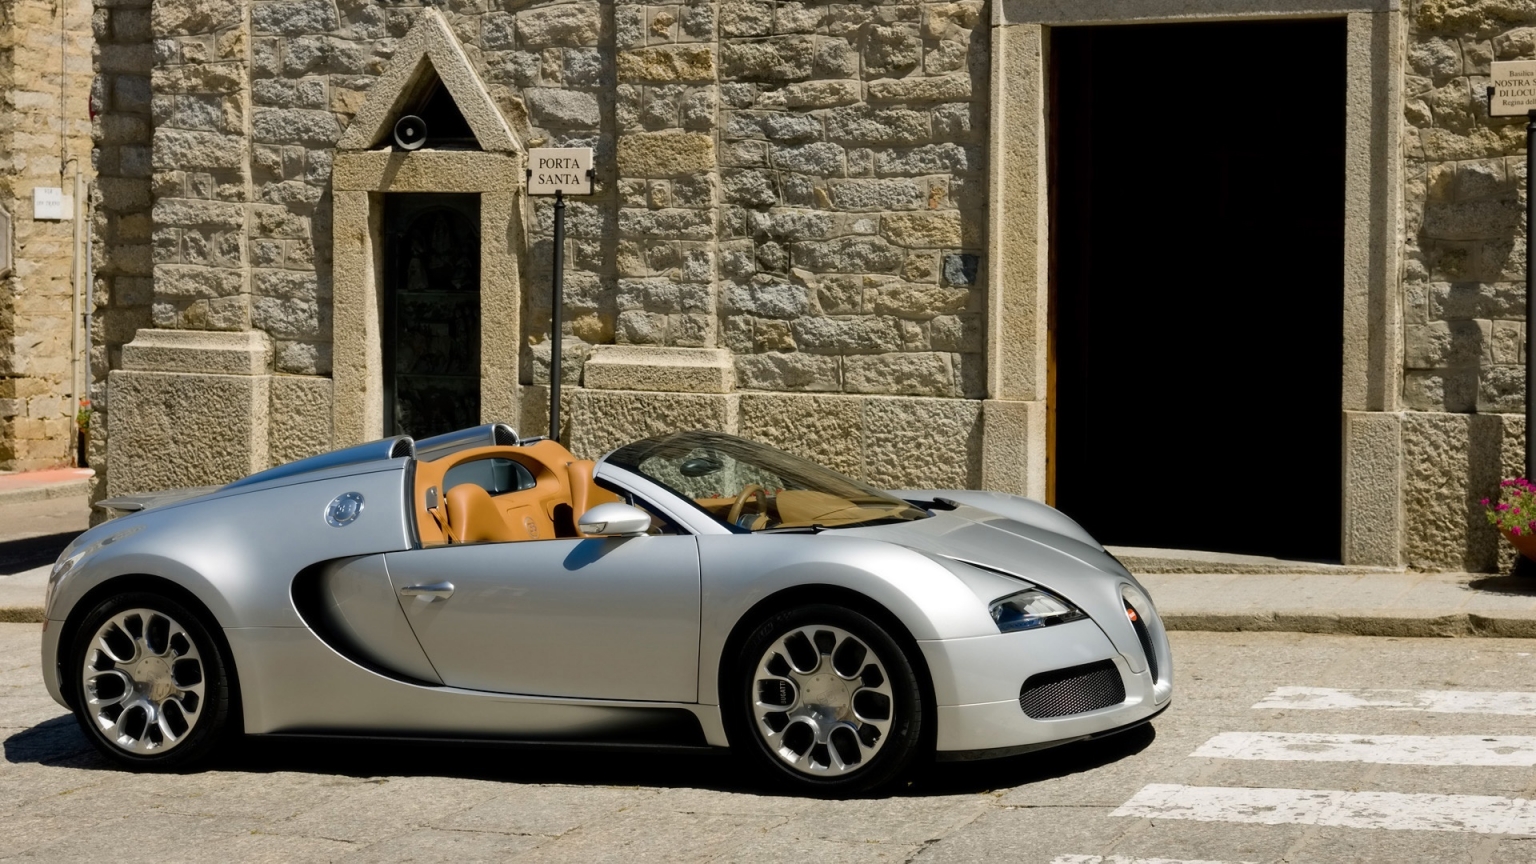 Bugatti Veyron 16.4 Grand Sport 2010 in Sardinia - Side 3 for 1536 x 864 HDTV resolution